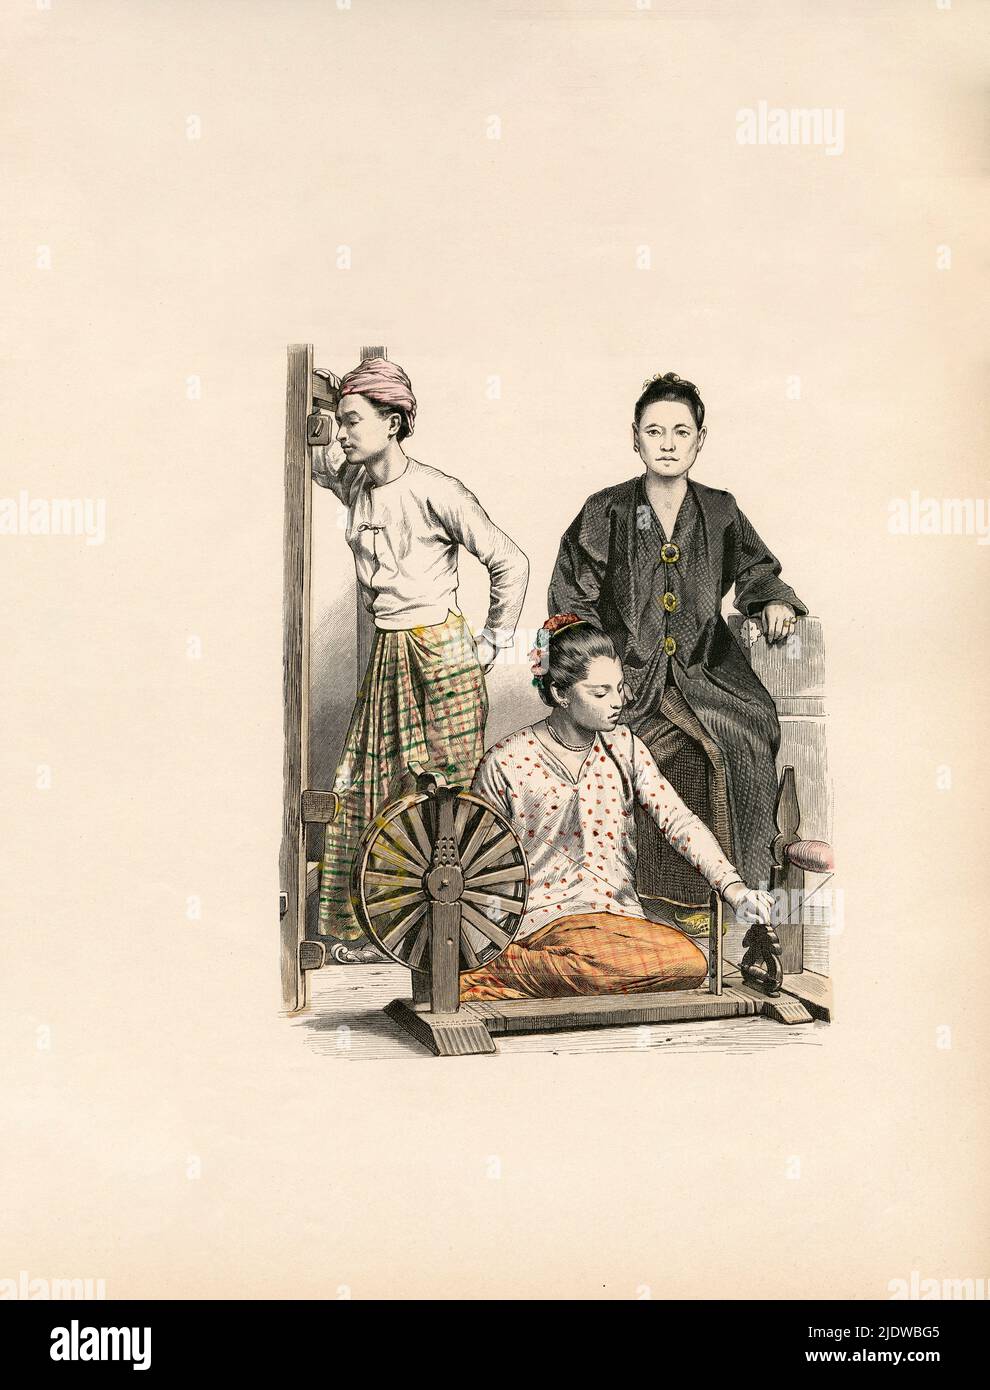 Pu-cho Weavers from Burma, Woman from Ava Former Capital of Burma, late 19th Century, Illustration, The History of Costume, Braun & Schneider, Munich, Germany, 1861-1880 Stock Photo